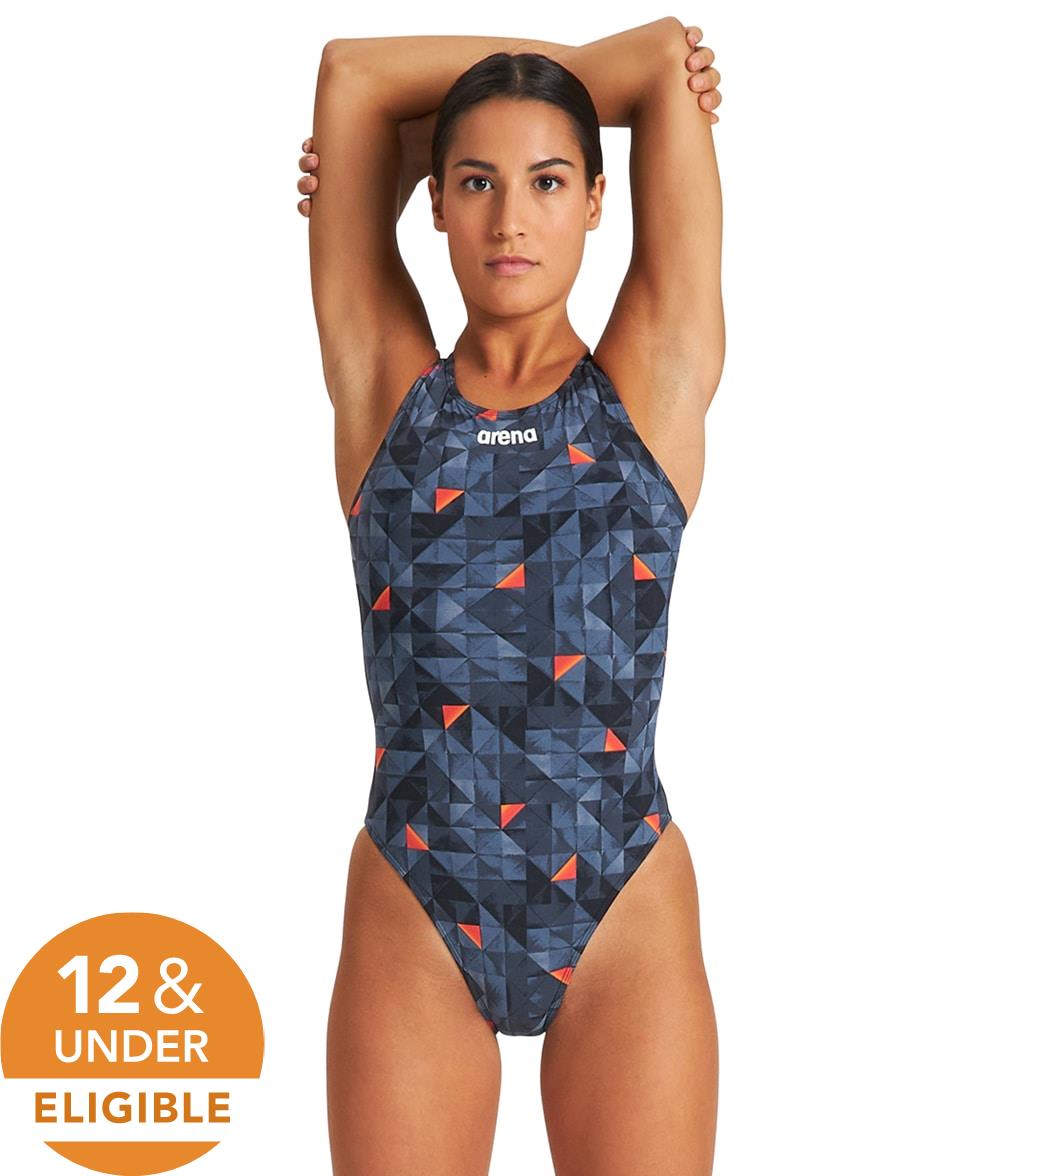 Arena Women's Powerskin St Classic Limited Edition Tech Suit Swimsuit - Black/Orange 22 Elastane/Polyamide - Swimoutlet.com